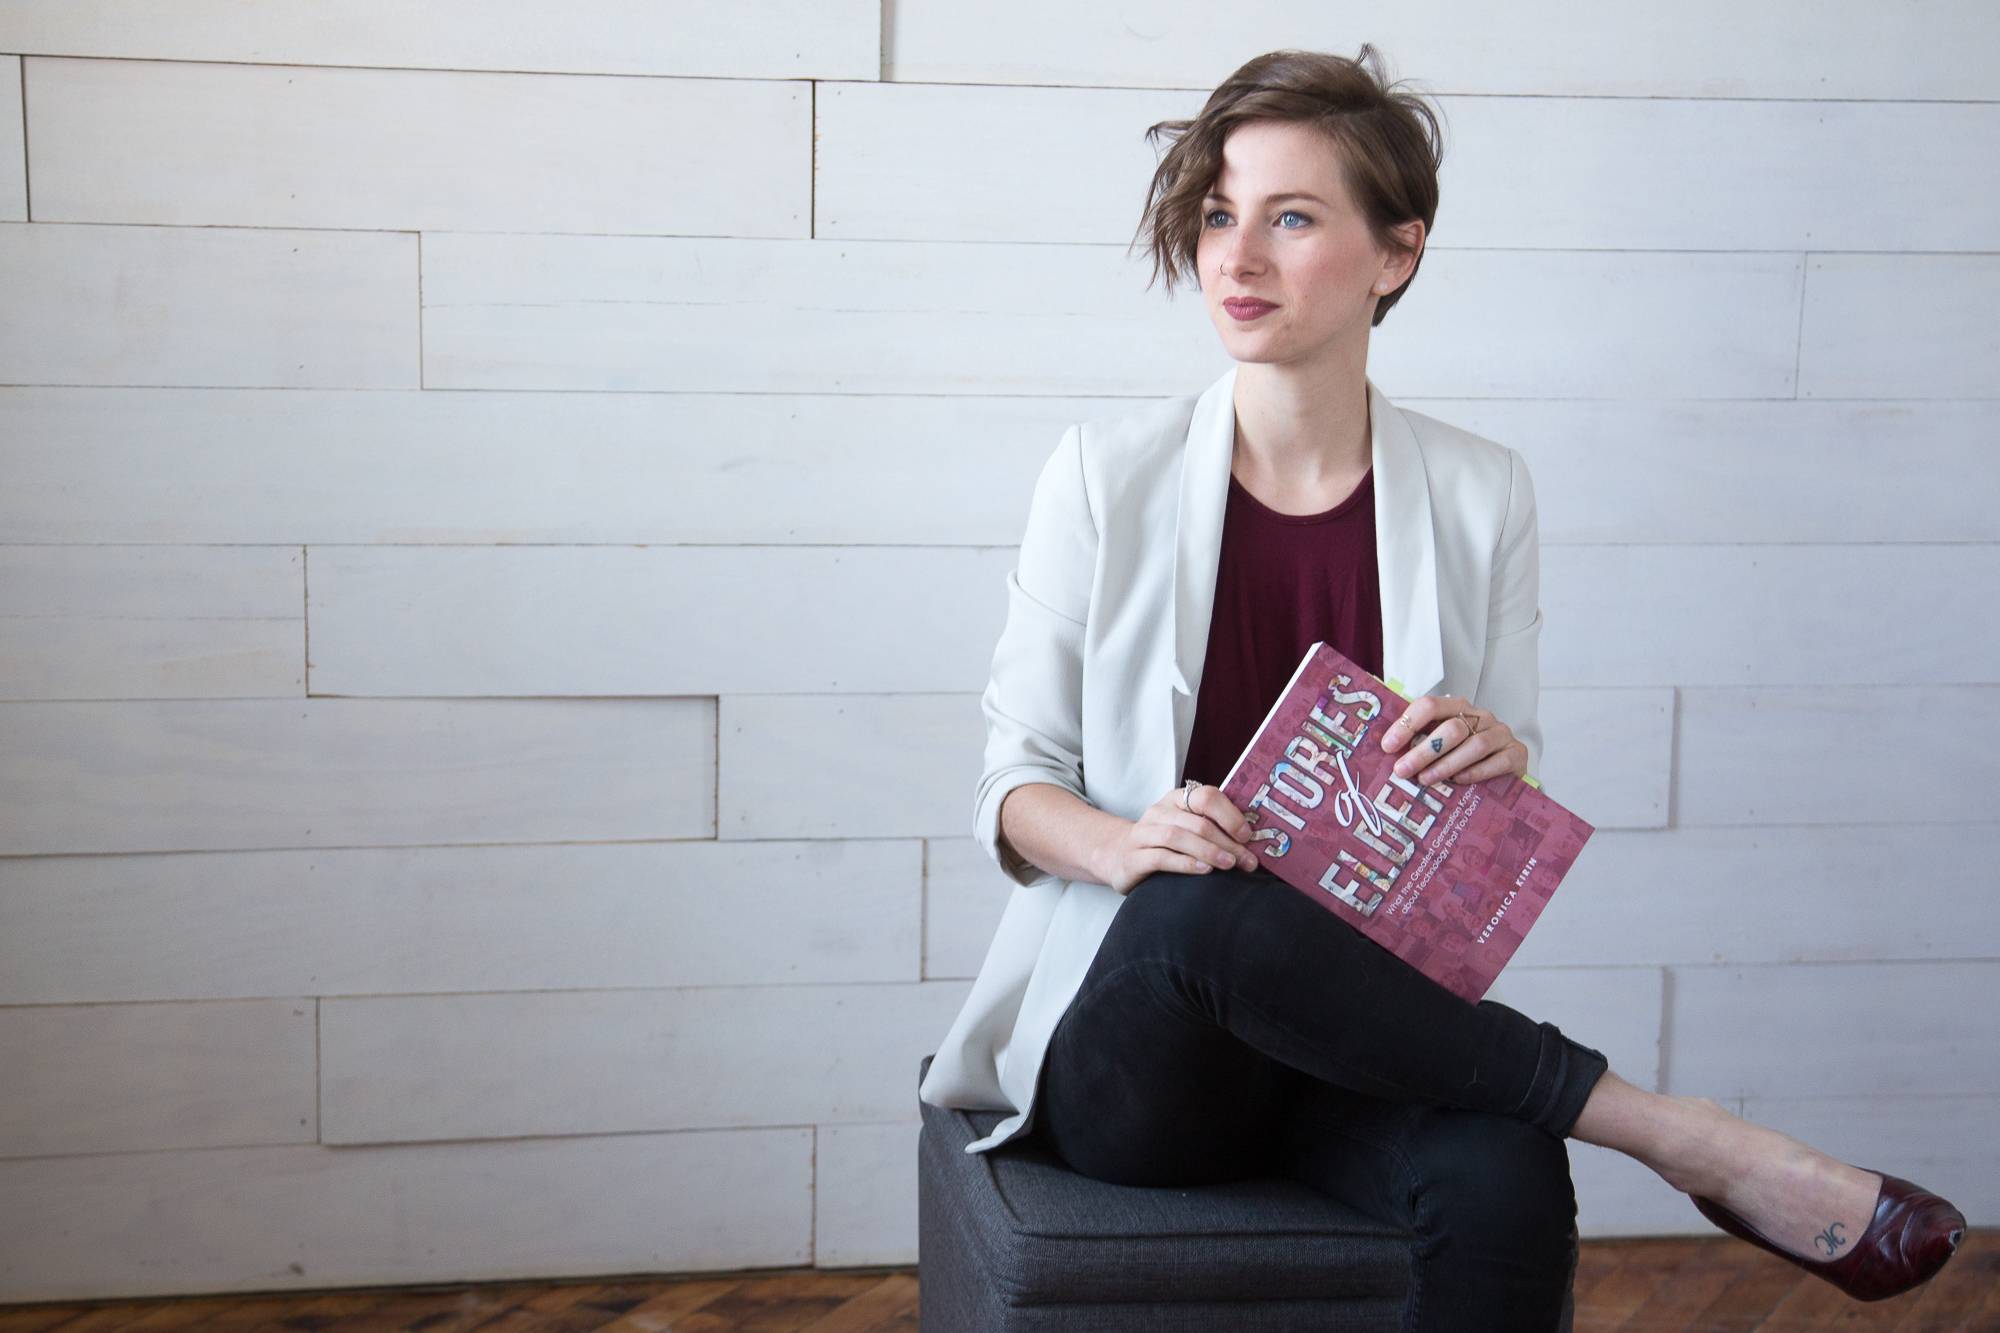 Veronica Kirin sitting on a chair holding a book